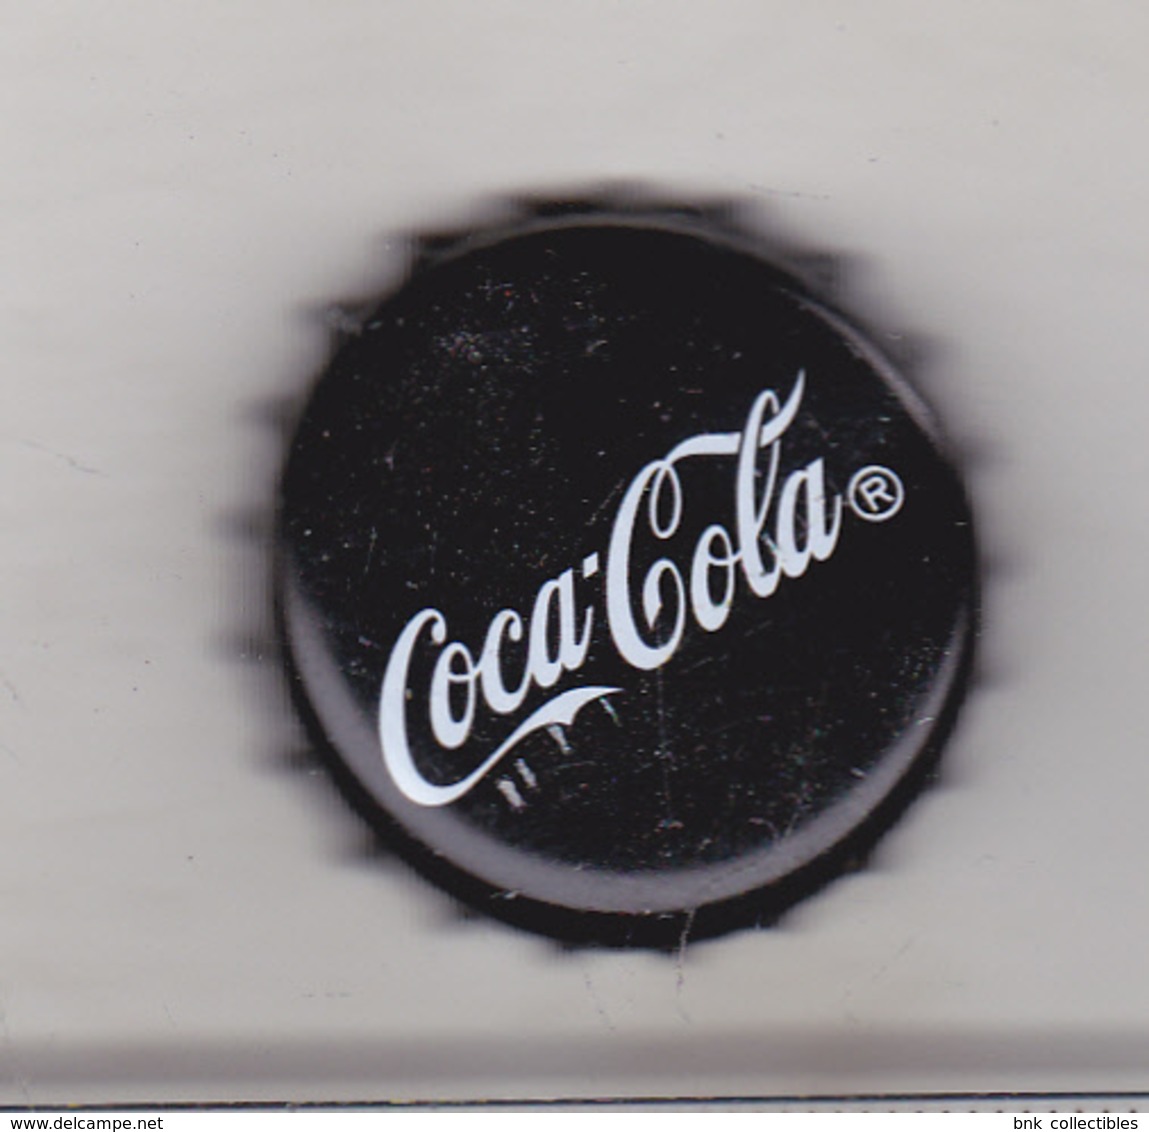 Romania Coca Cola Cap - Black - Soda